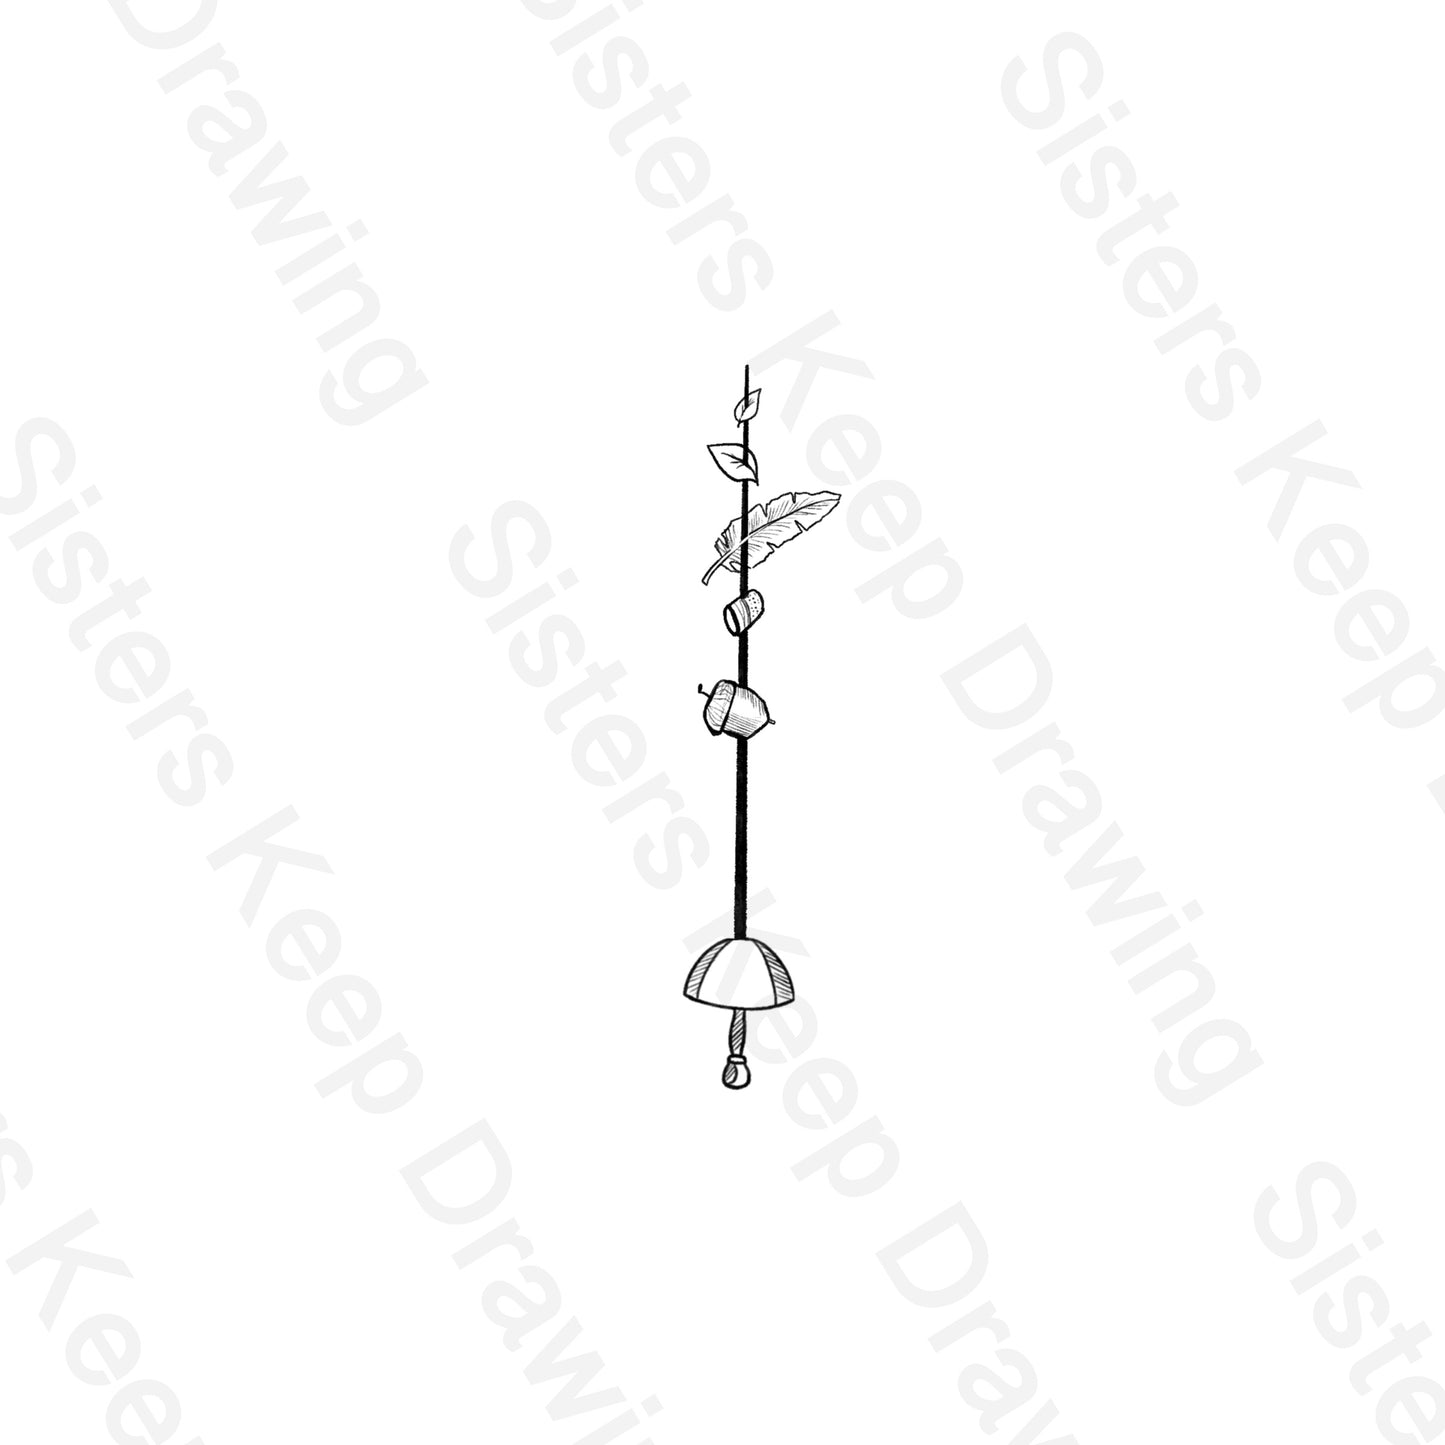 Peter Pan's sword piercing acorns and leaves - Tattoo Transparent PNG- instant download digital printable artwork